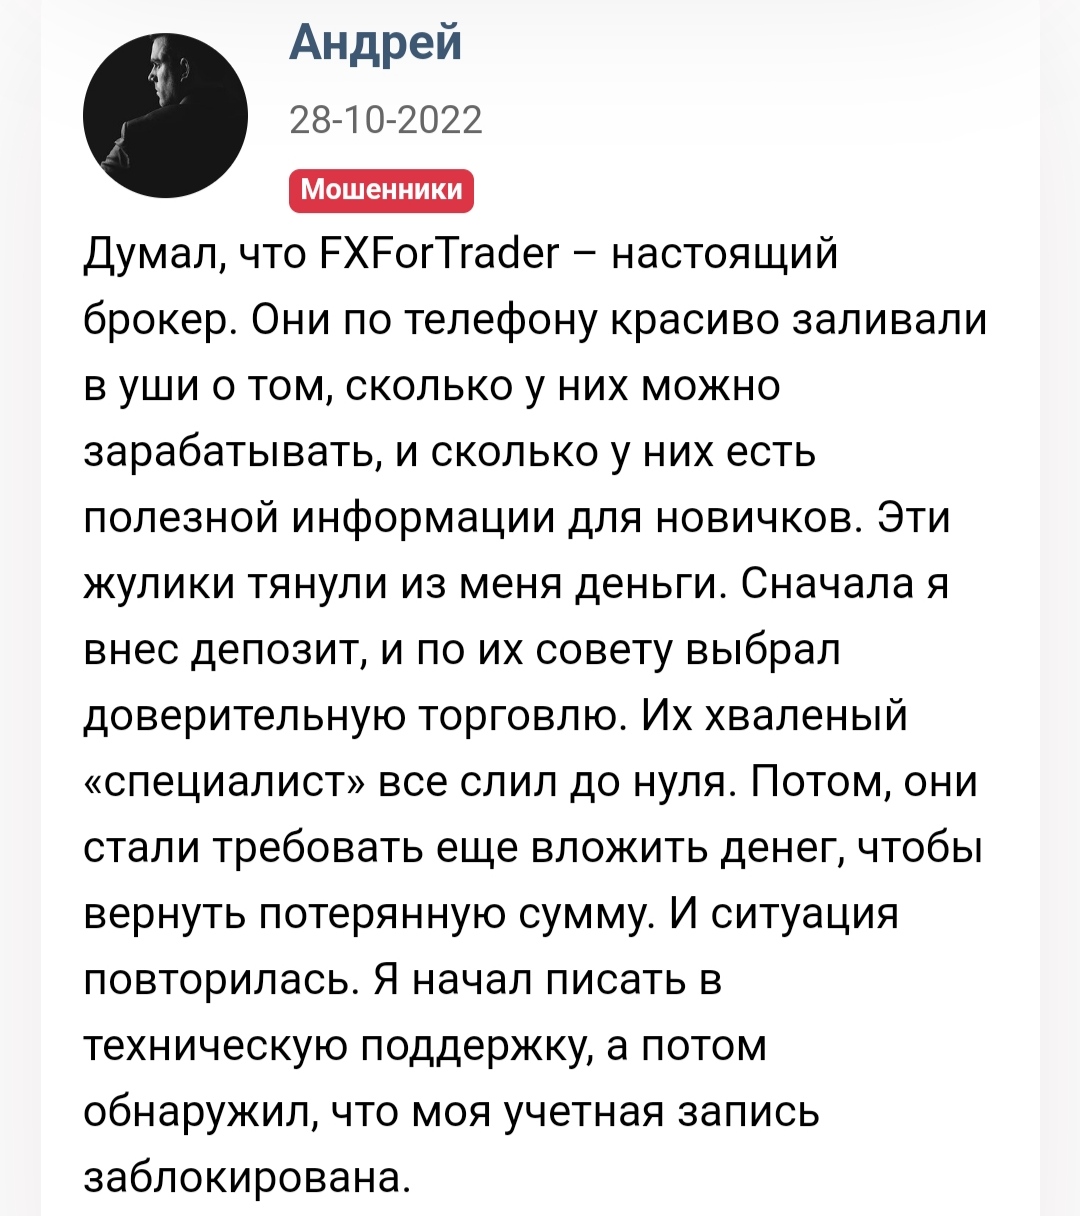 FX For Trader - отзывы